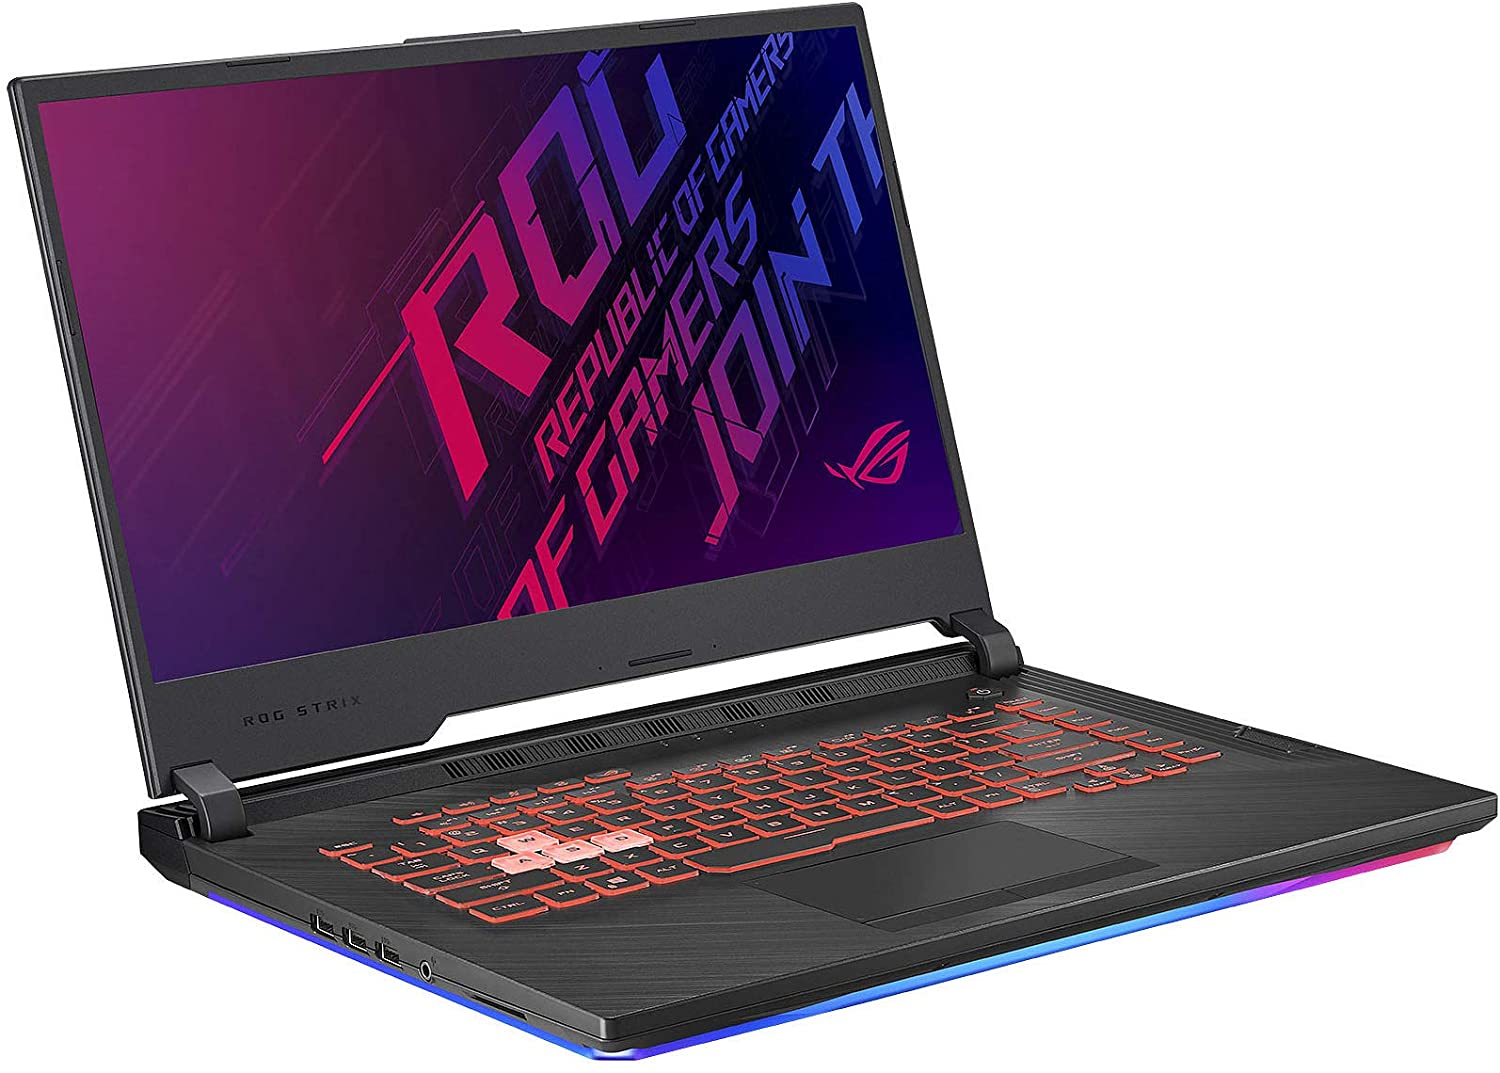 ROG Strix G G531GT Gaming Laptop With 15.6-Inch Display, Core i7 Processor 16GB RAM 512GB SSD 4GB NVIDIA GeForce GTX 1650 Graphics Card Black